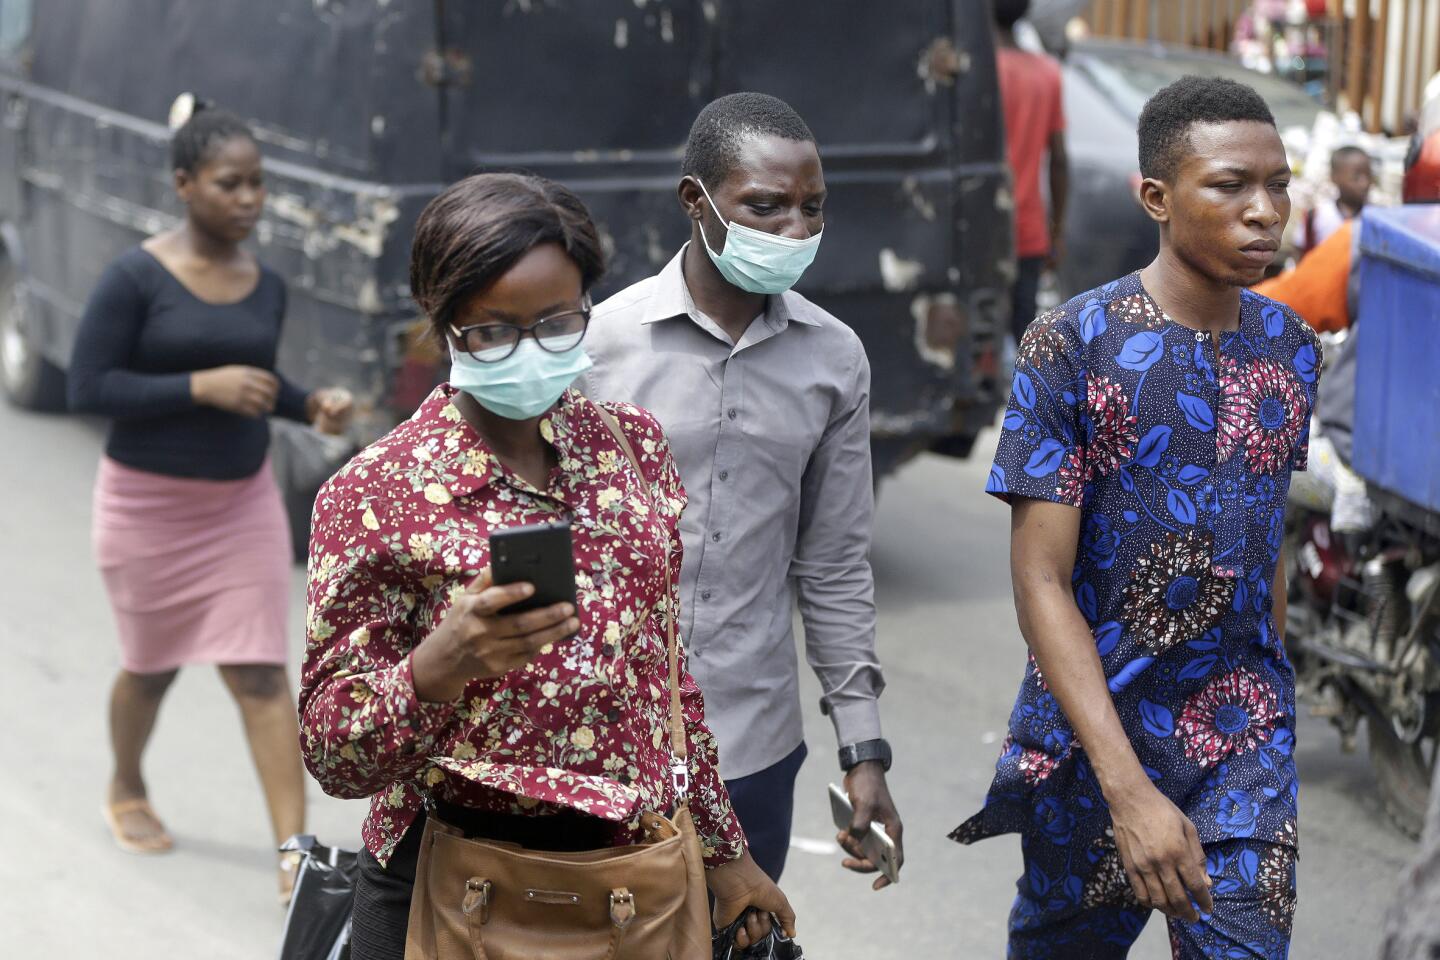 Nigeria: People wearing face masks walk through a busy market in Lagos, Nigeria.